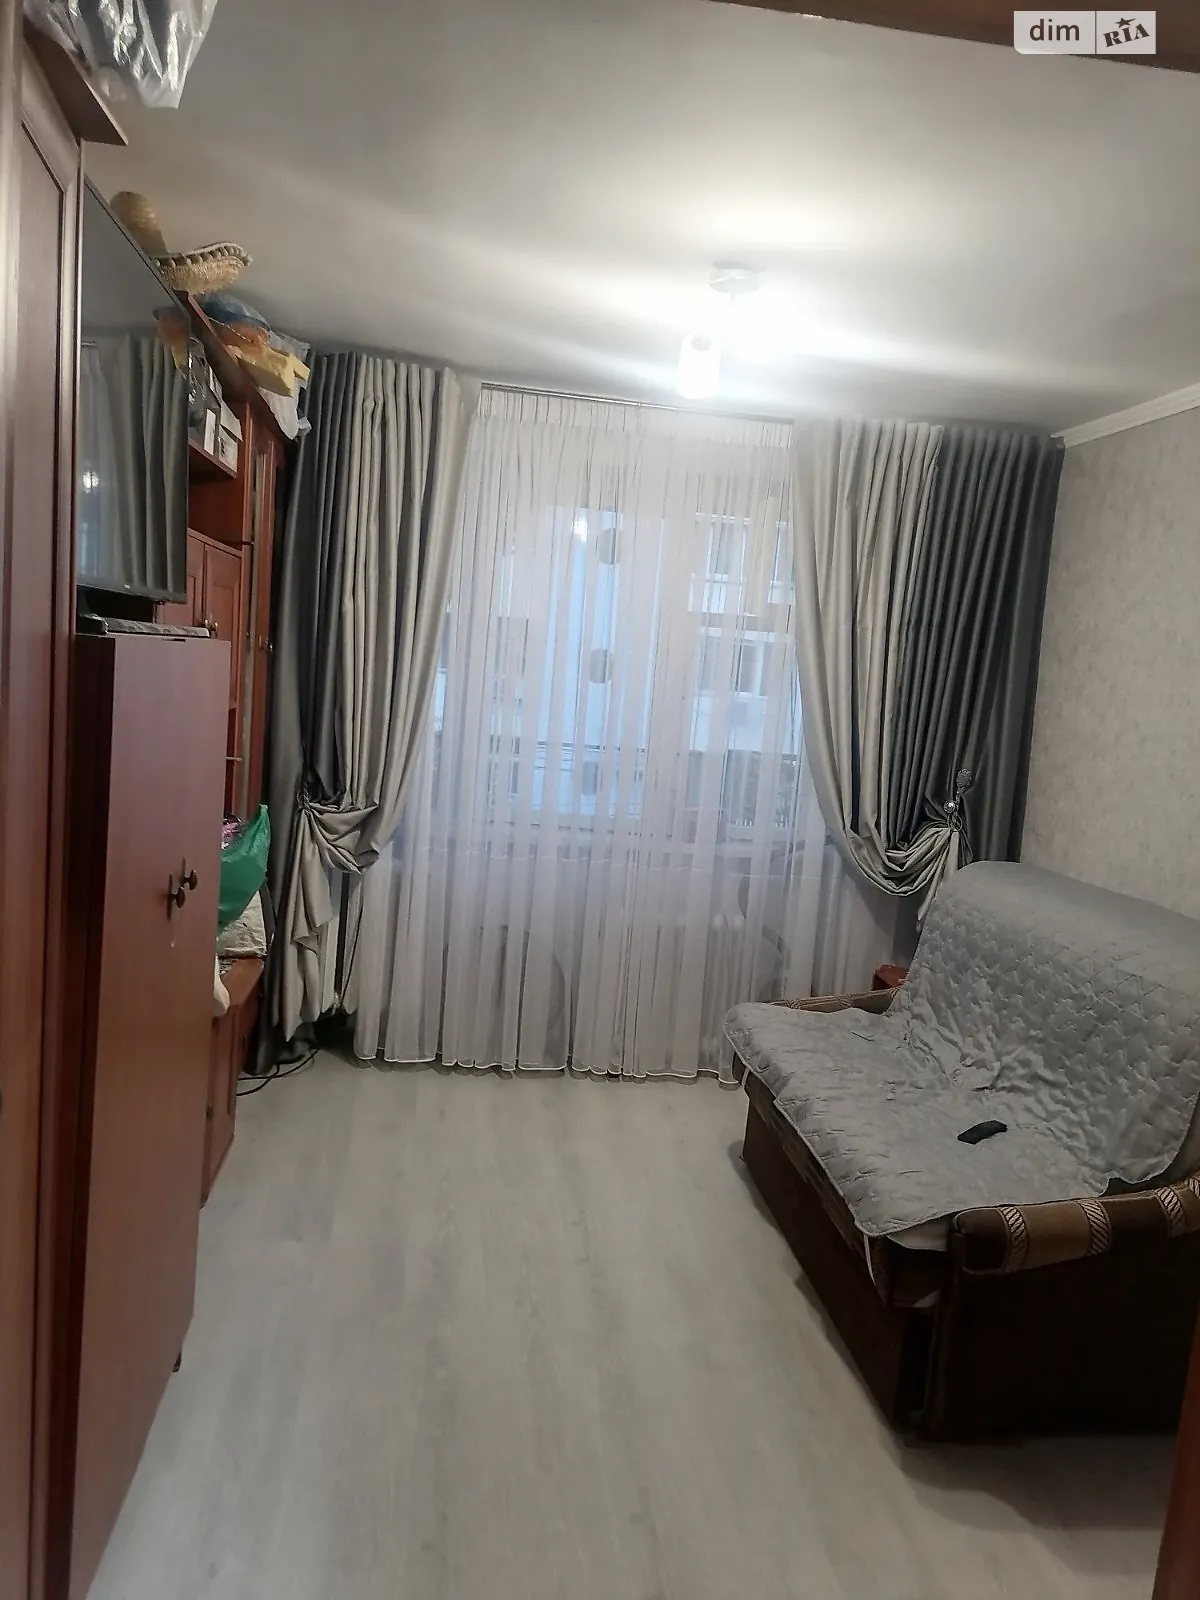 Продается комната 17.9 кв. м в Одессе, цена: 8500 $ - фото 1